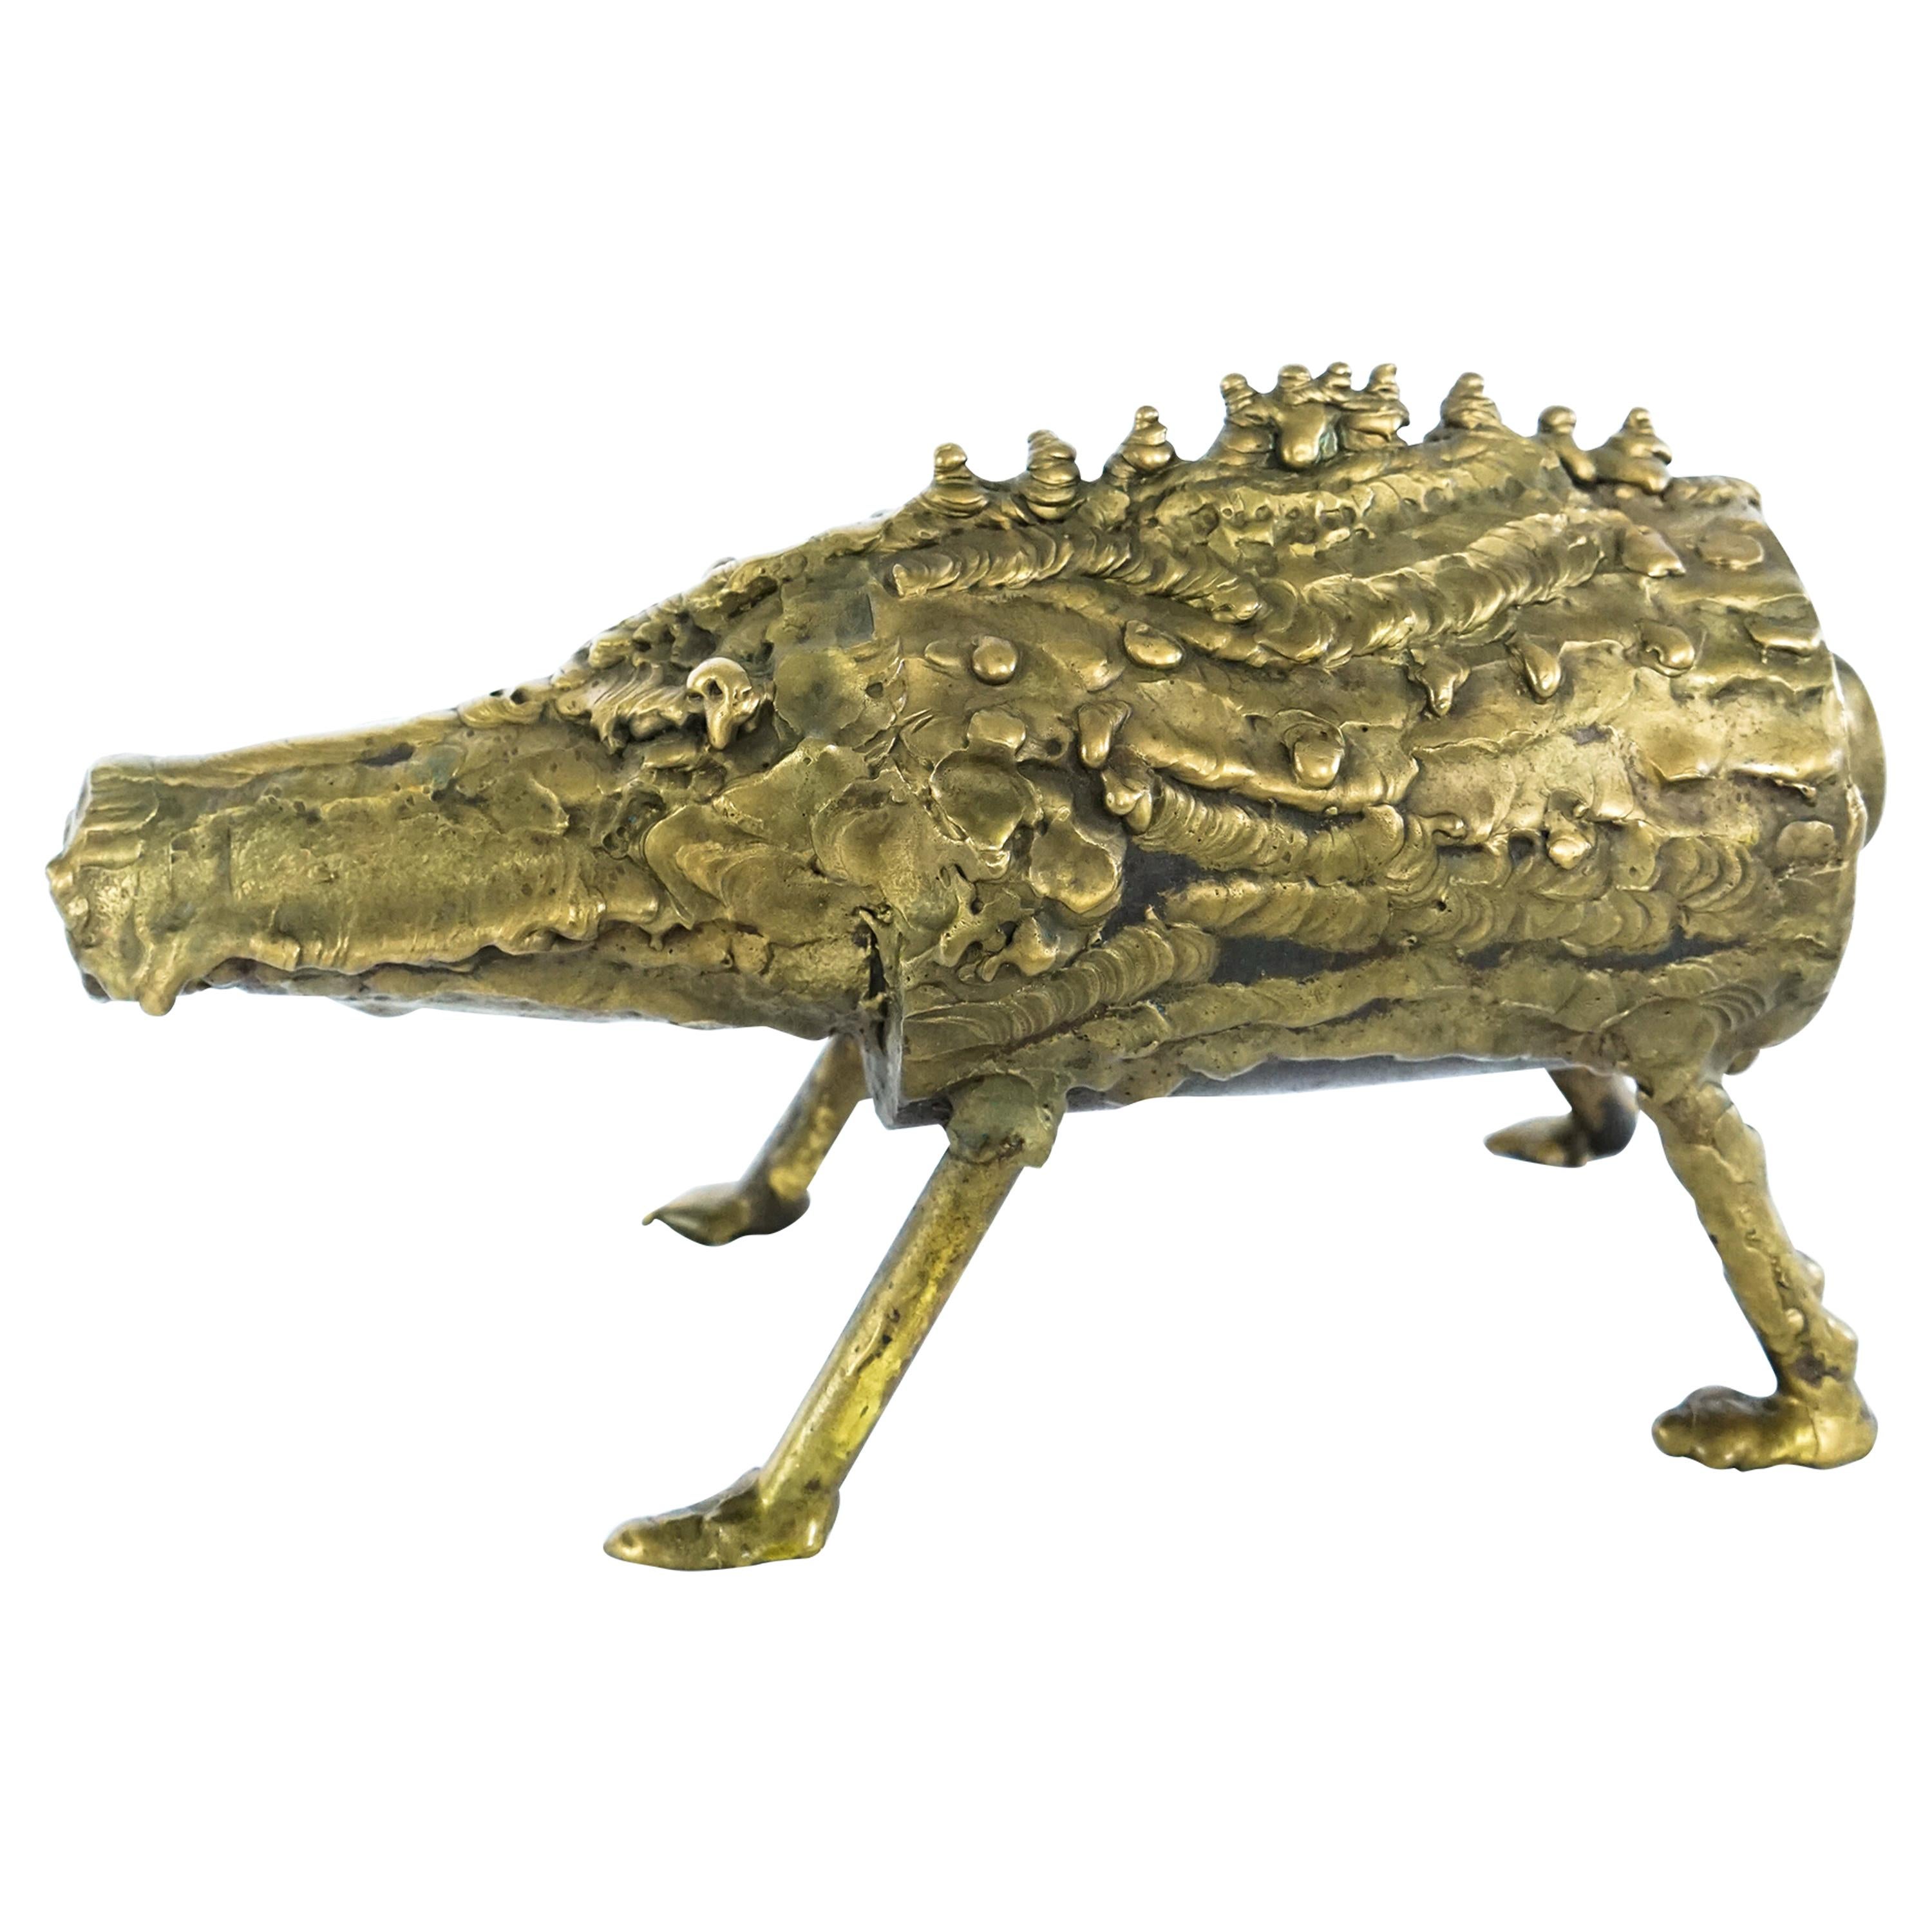 21st century, contemporary, cast bronze, Figurative Metal Sculpture "Golden Pig" For Sale